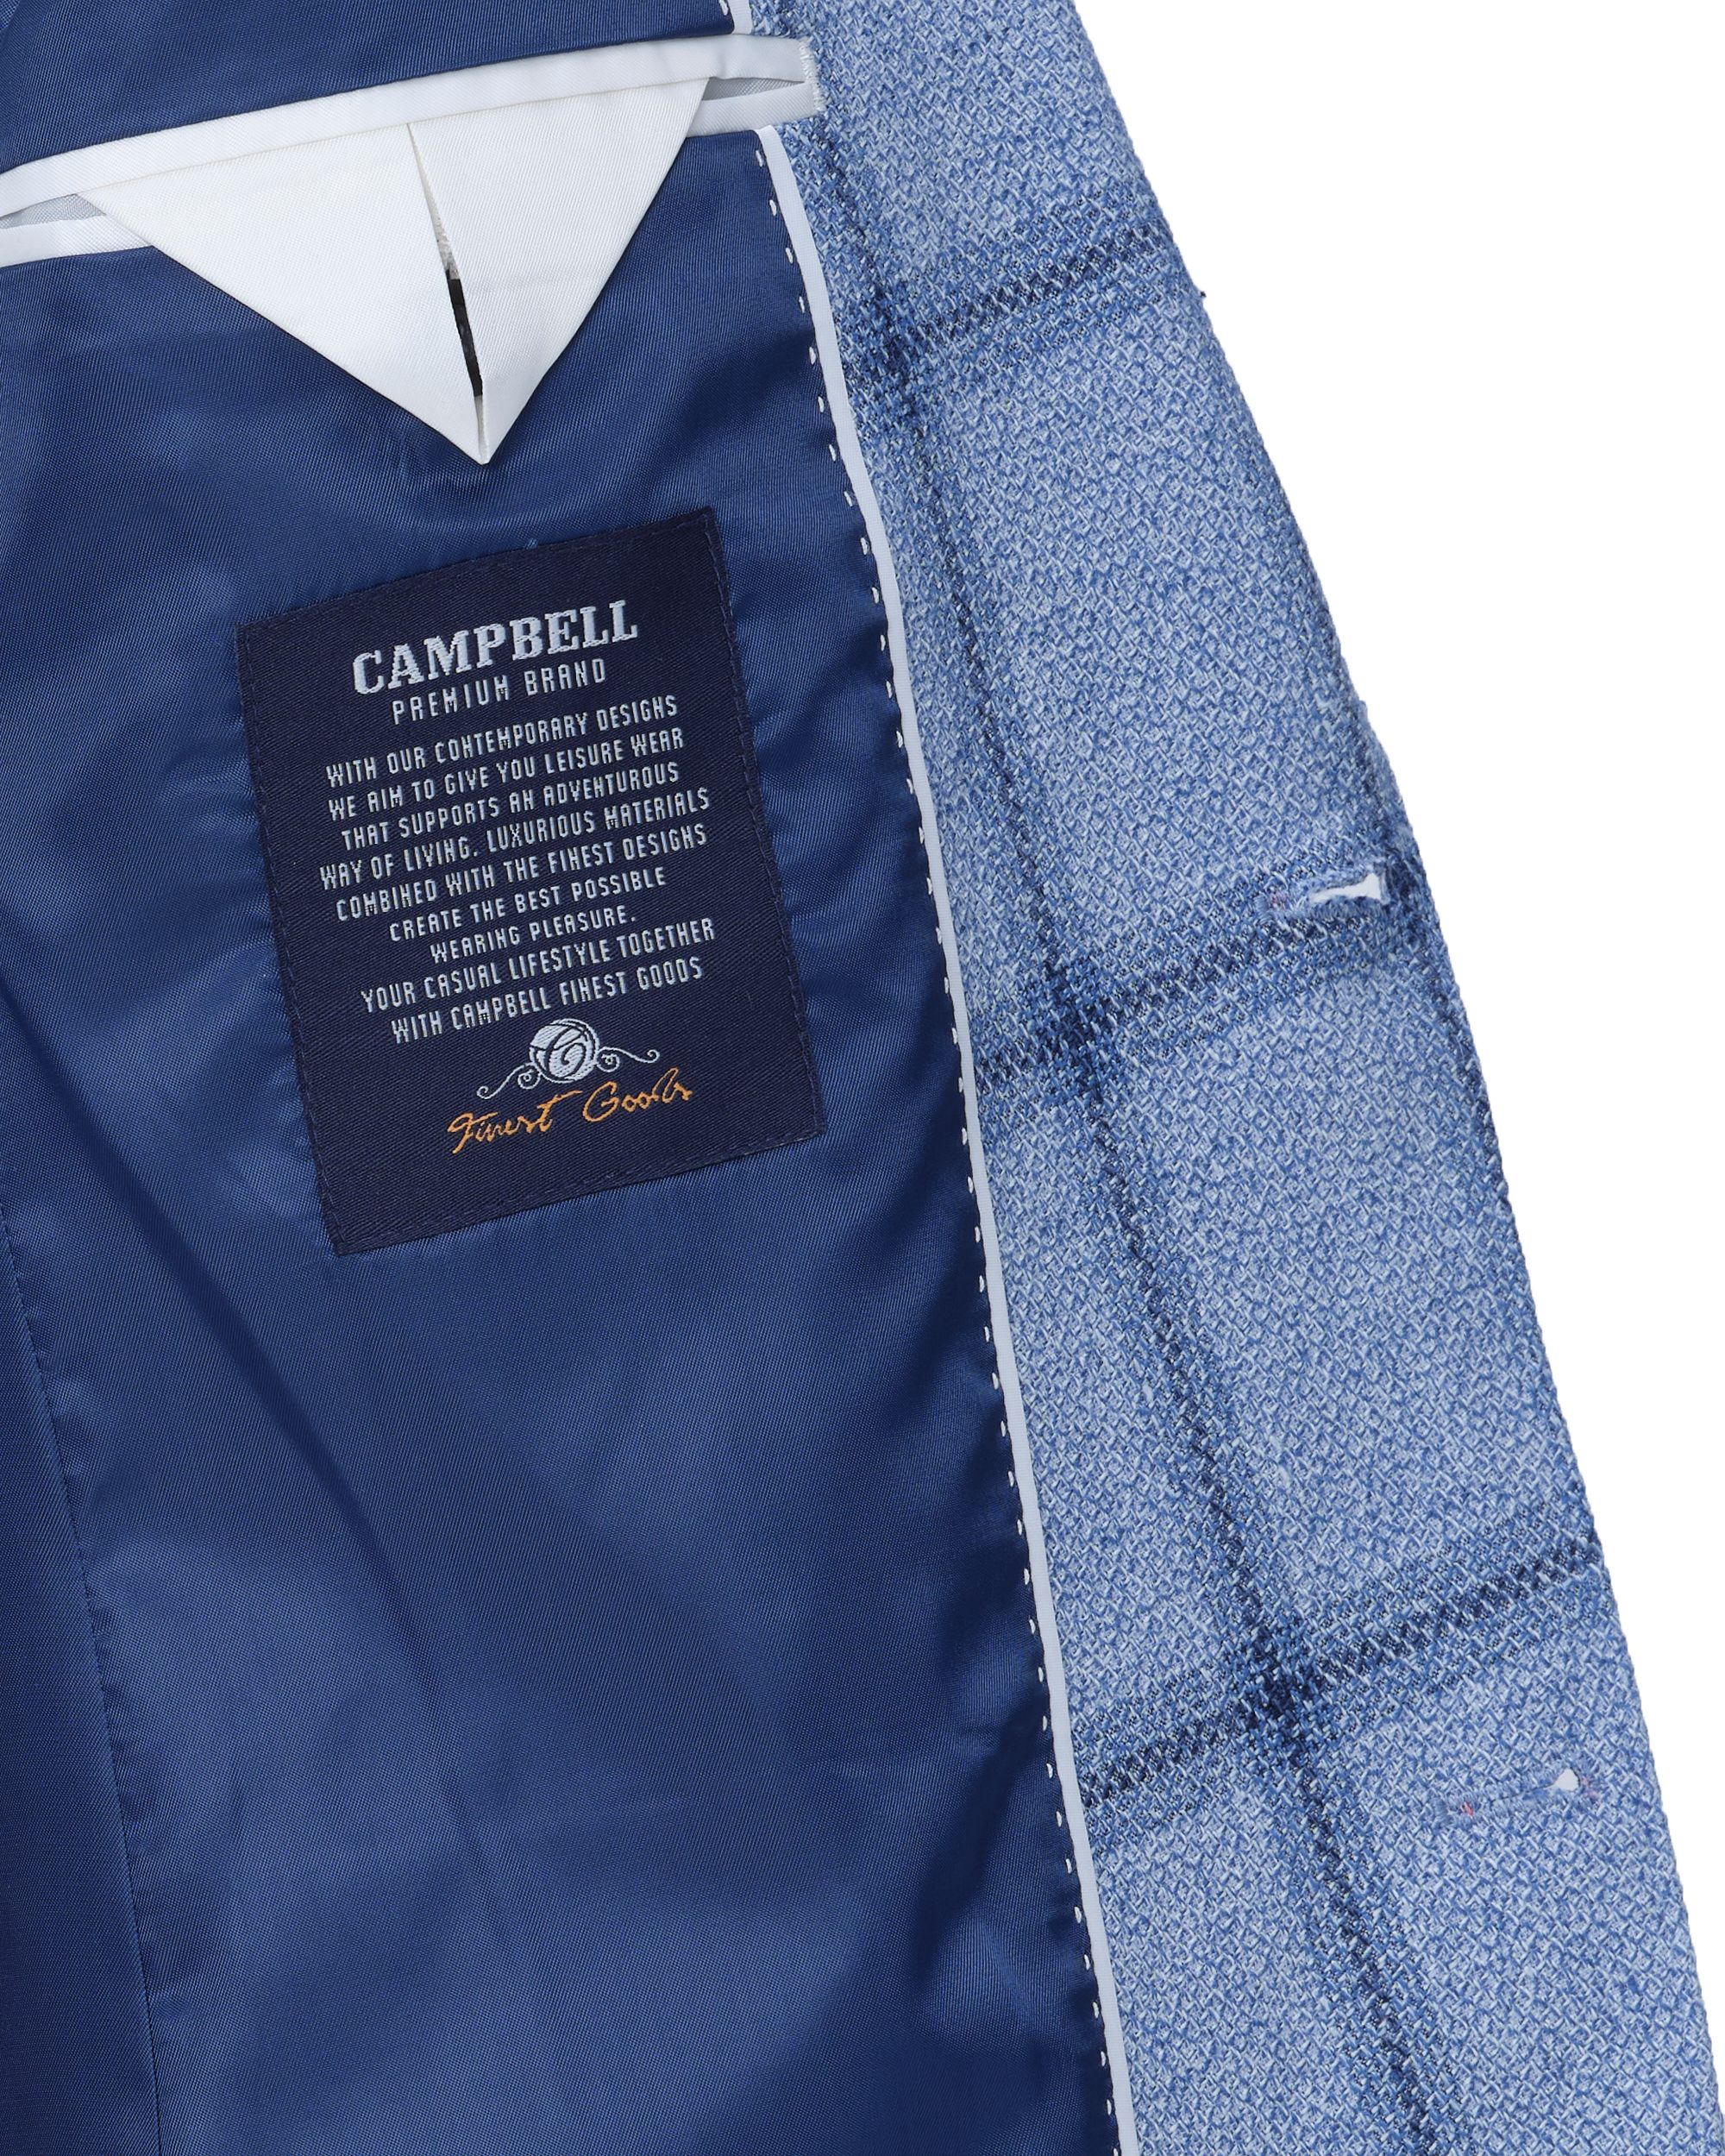 Campbell Classic Blazer L.blauw grote ruit 081512-001-48